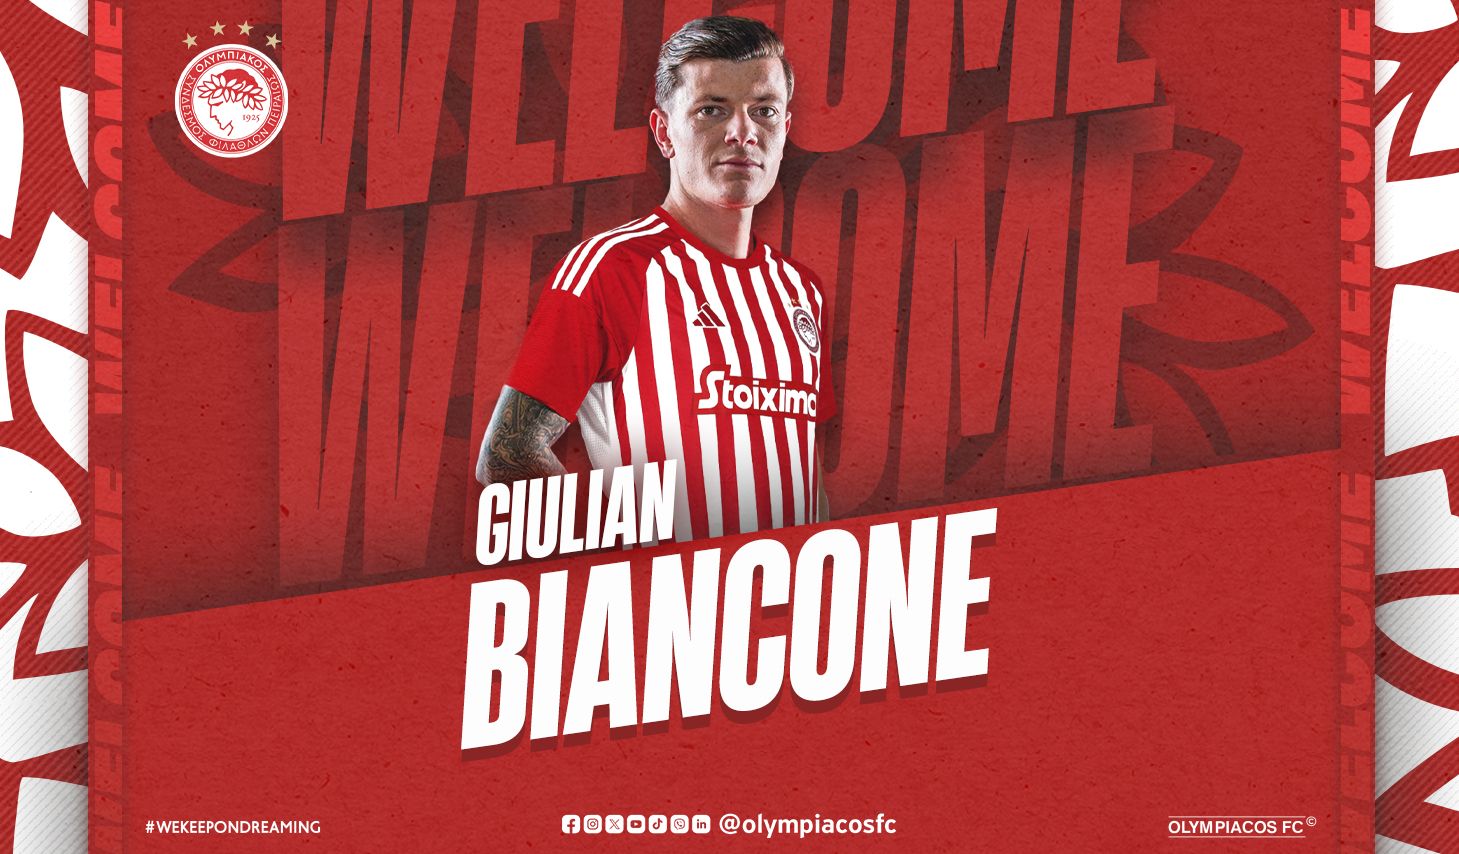 Giulian Biancone joins Olympiacos